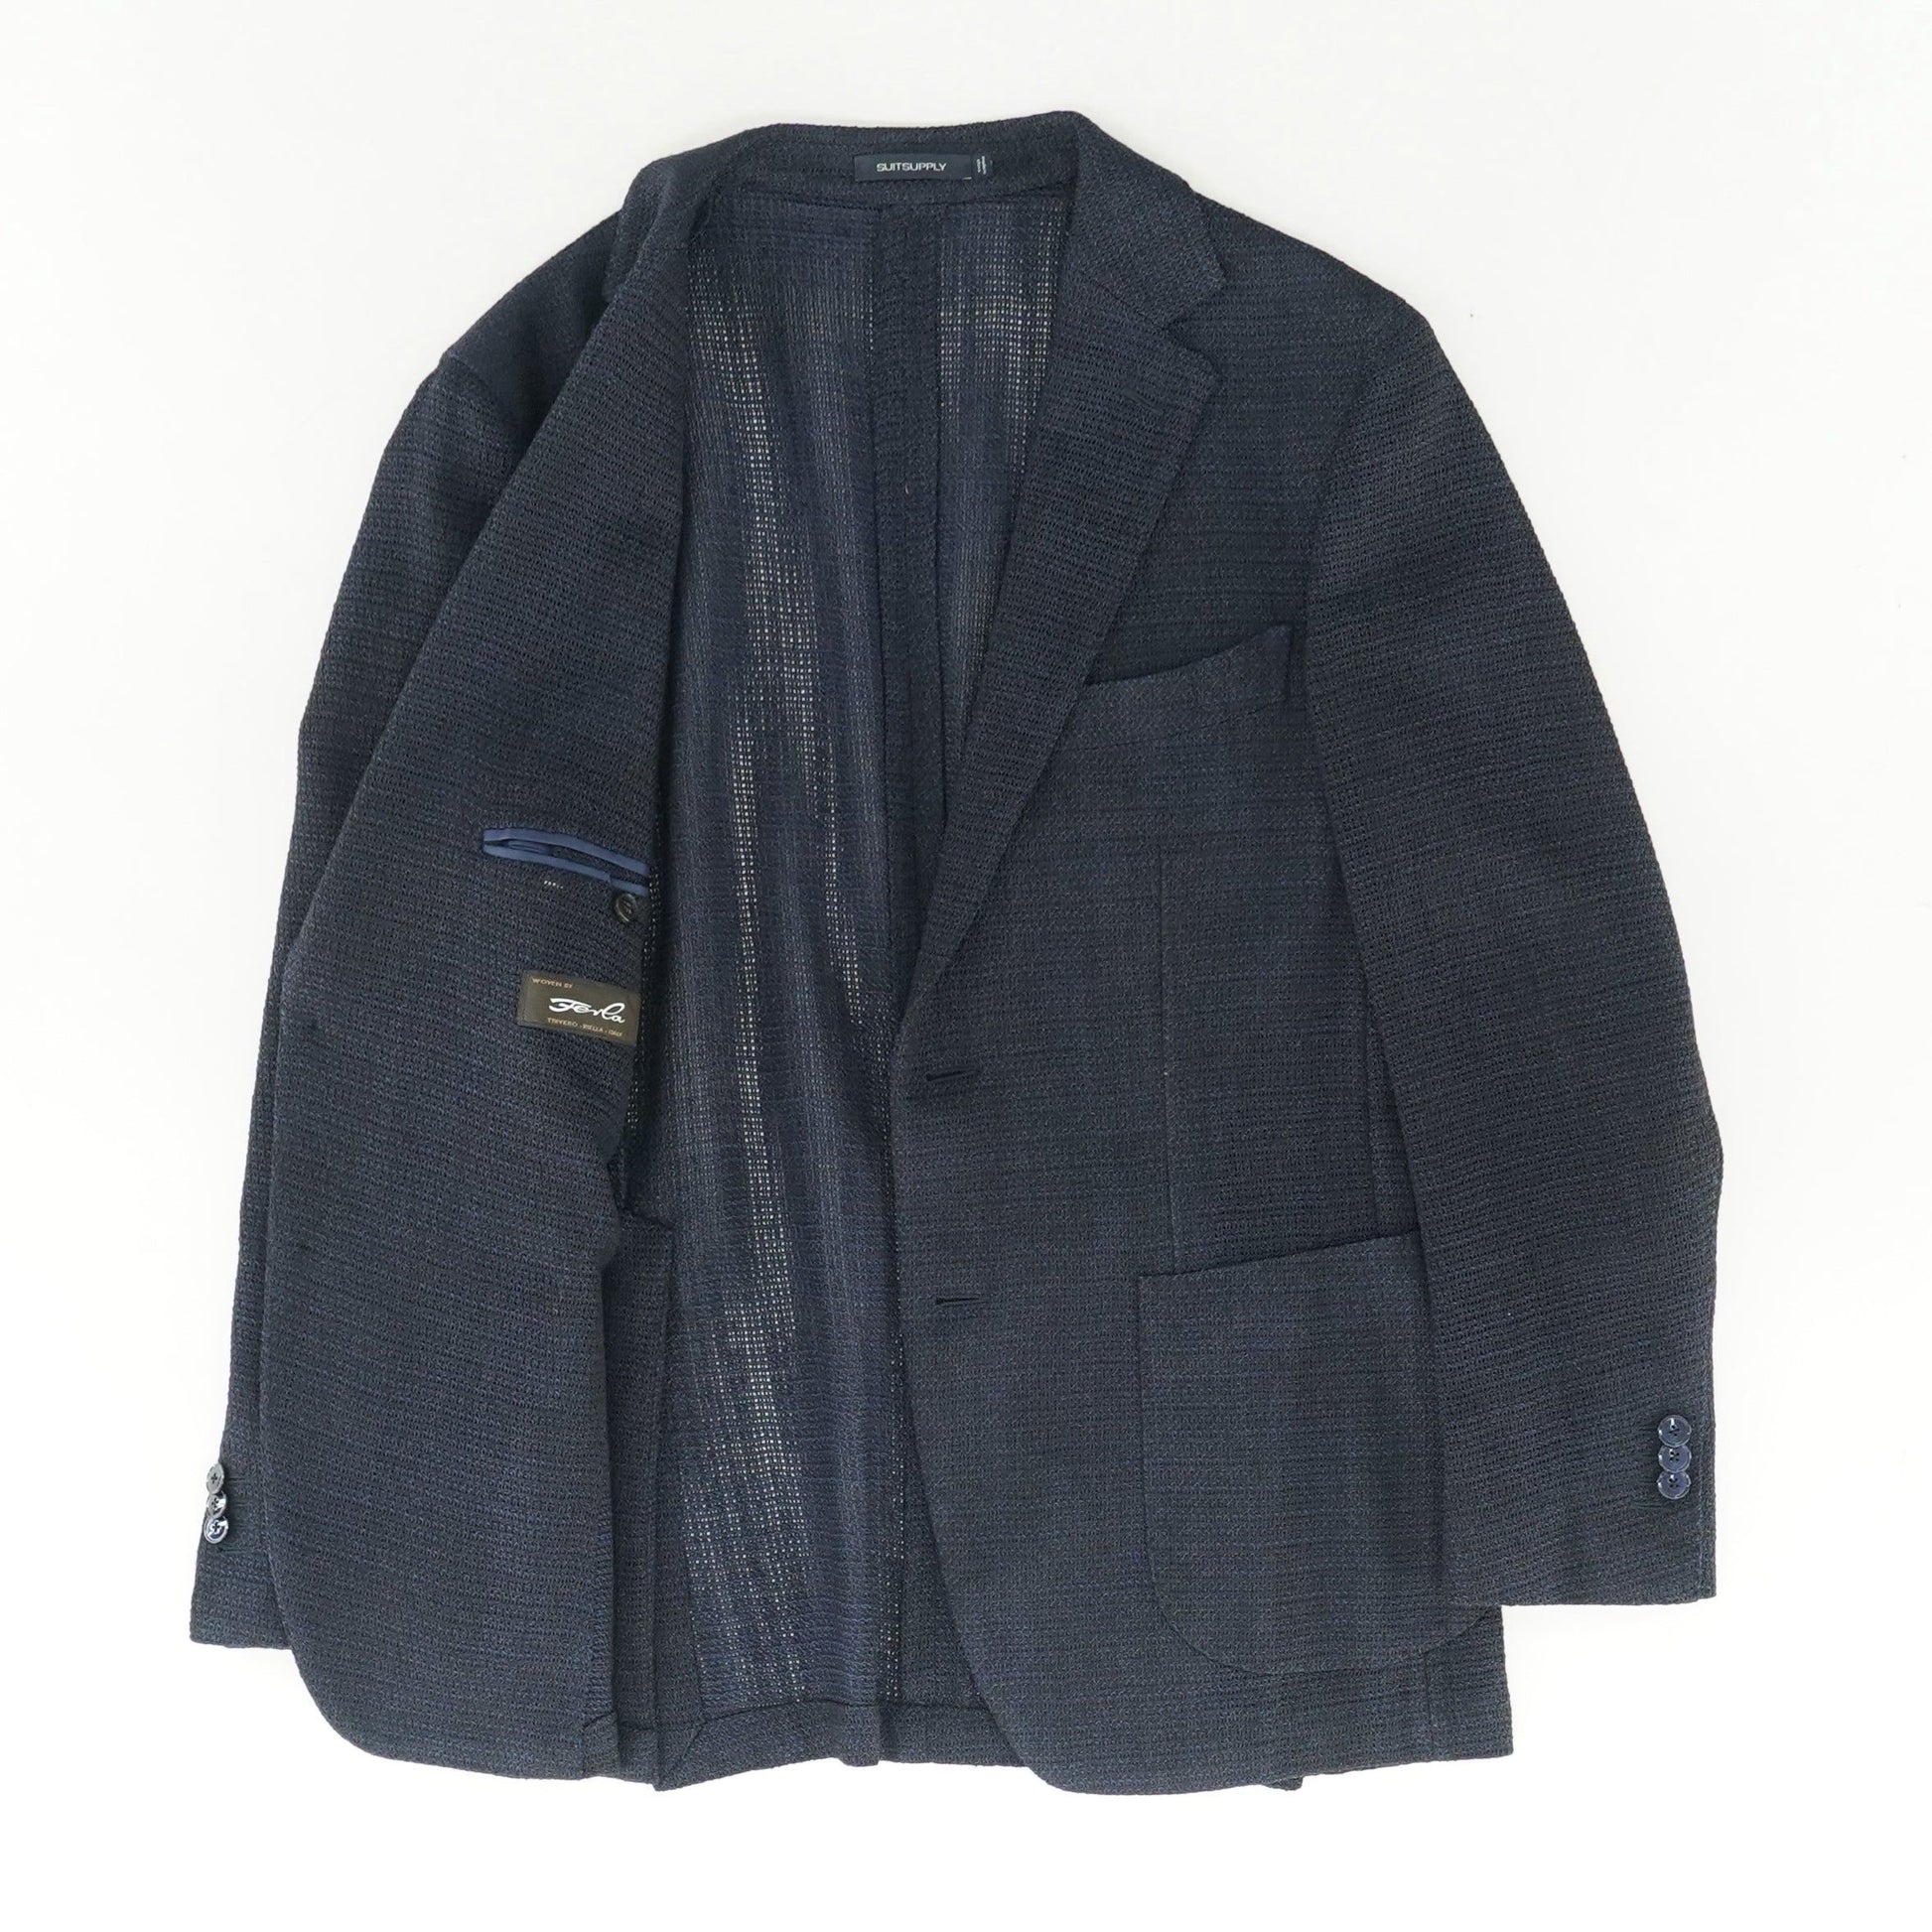 Louis Vuitton 2 Pockets Coat Grey Wool. Size 6 Months